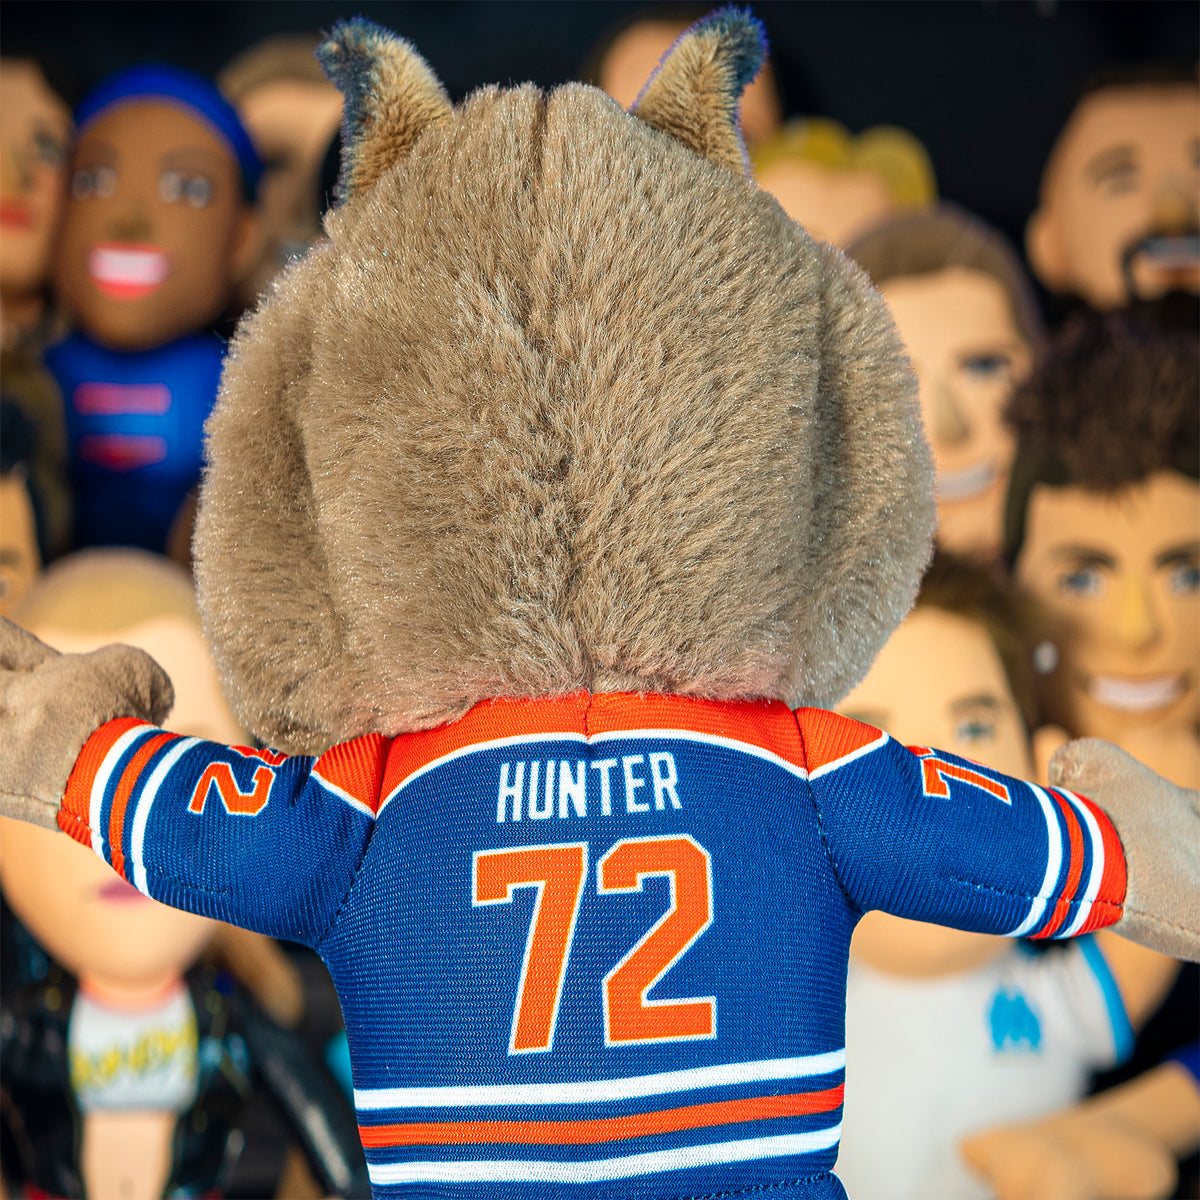 Edmonton Oilers Hunter 10&quot; Mascot Plush Figure